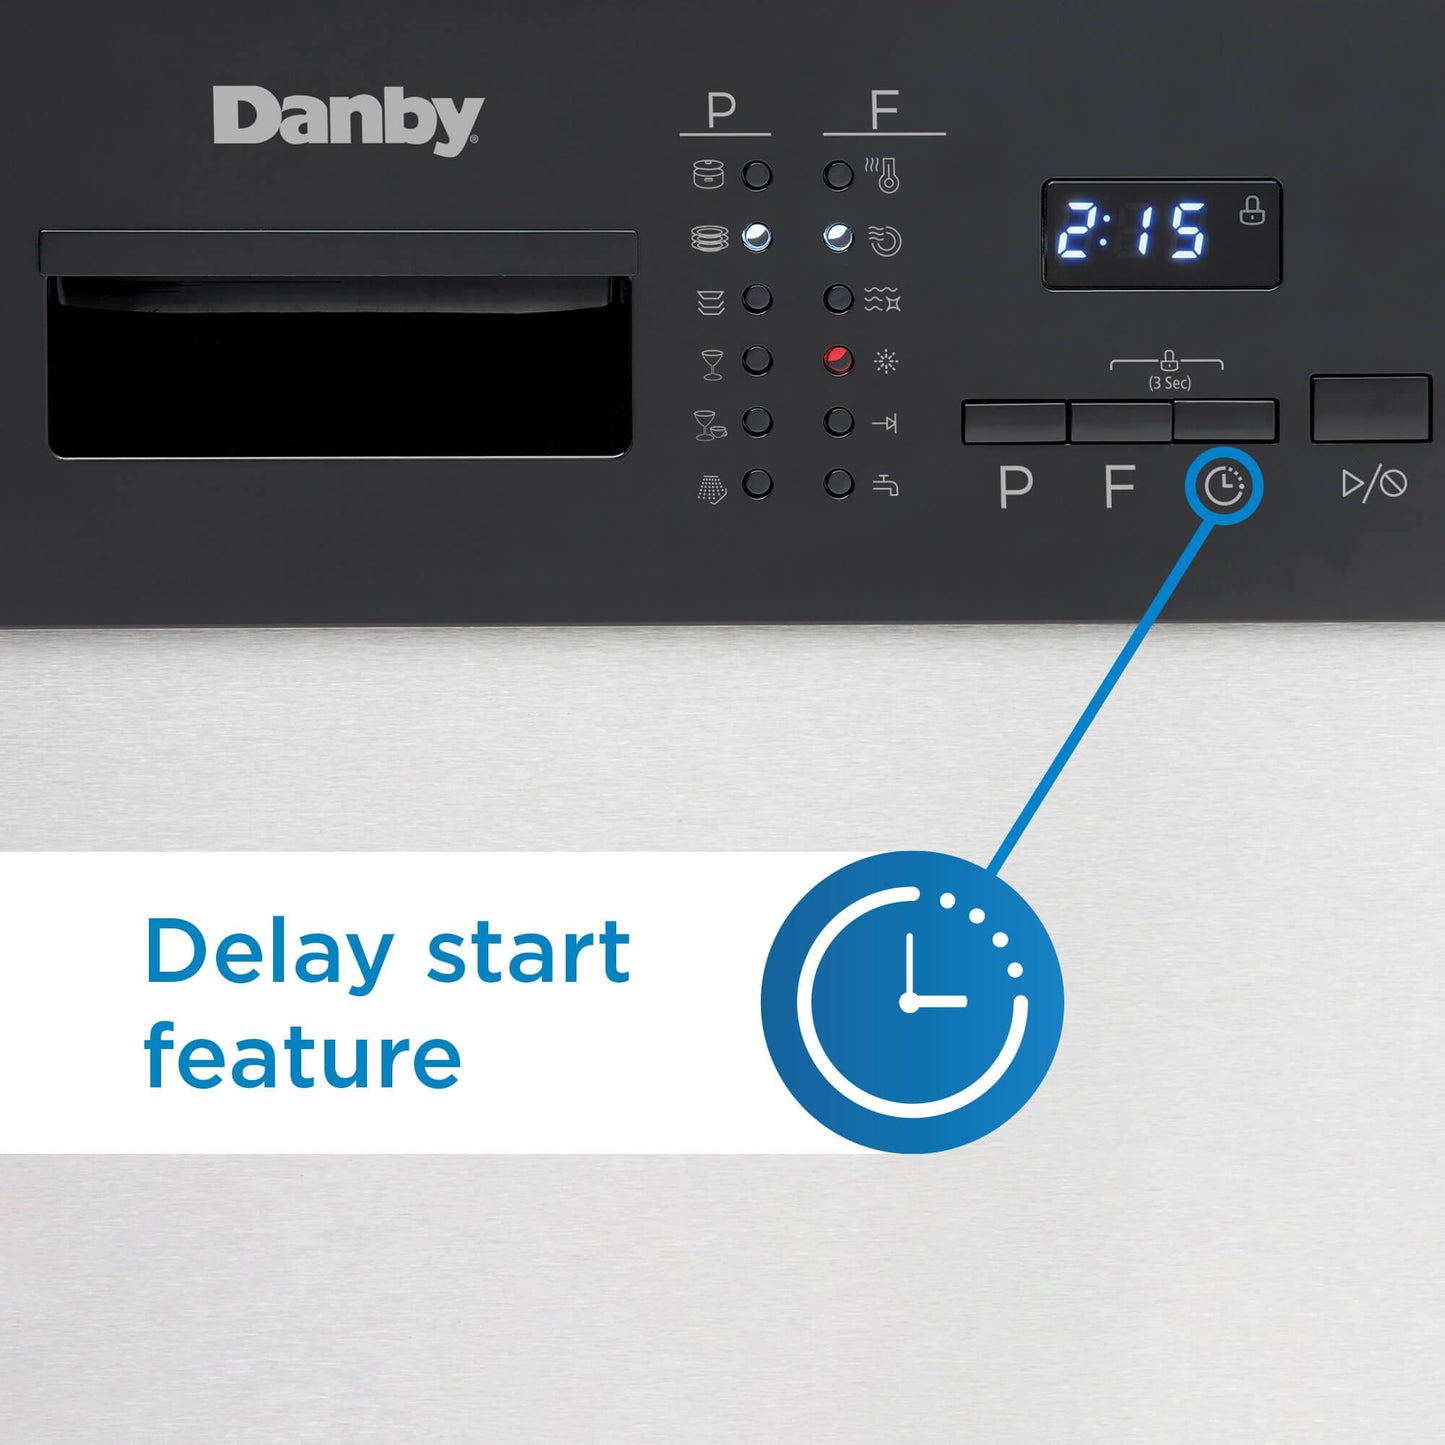 Danby DDW2404EBSS Danby 24" Stainless Full Size Dishwasher